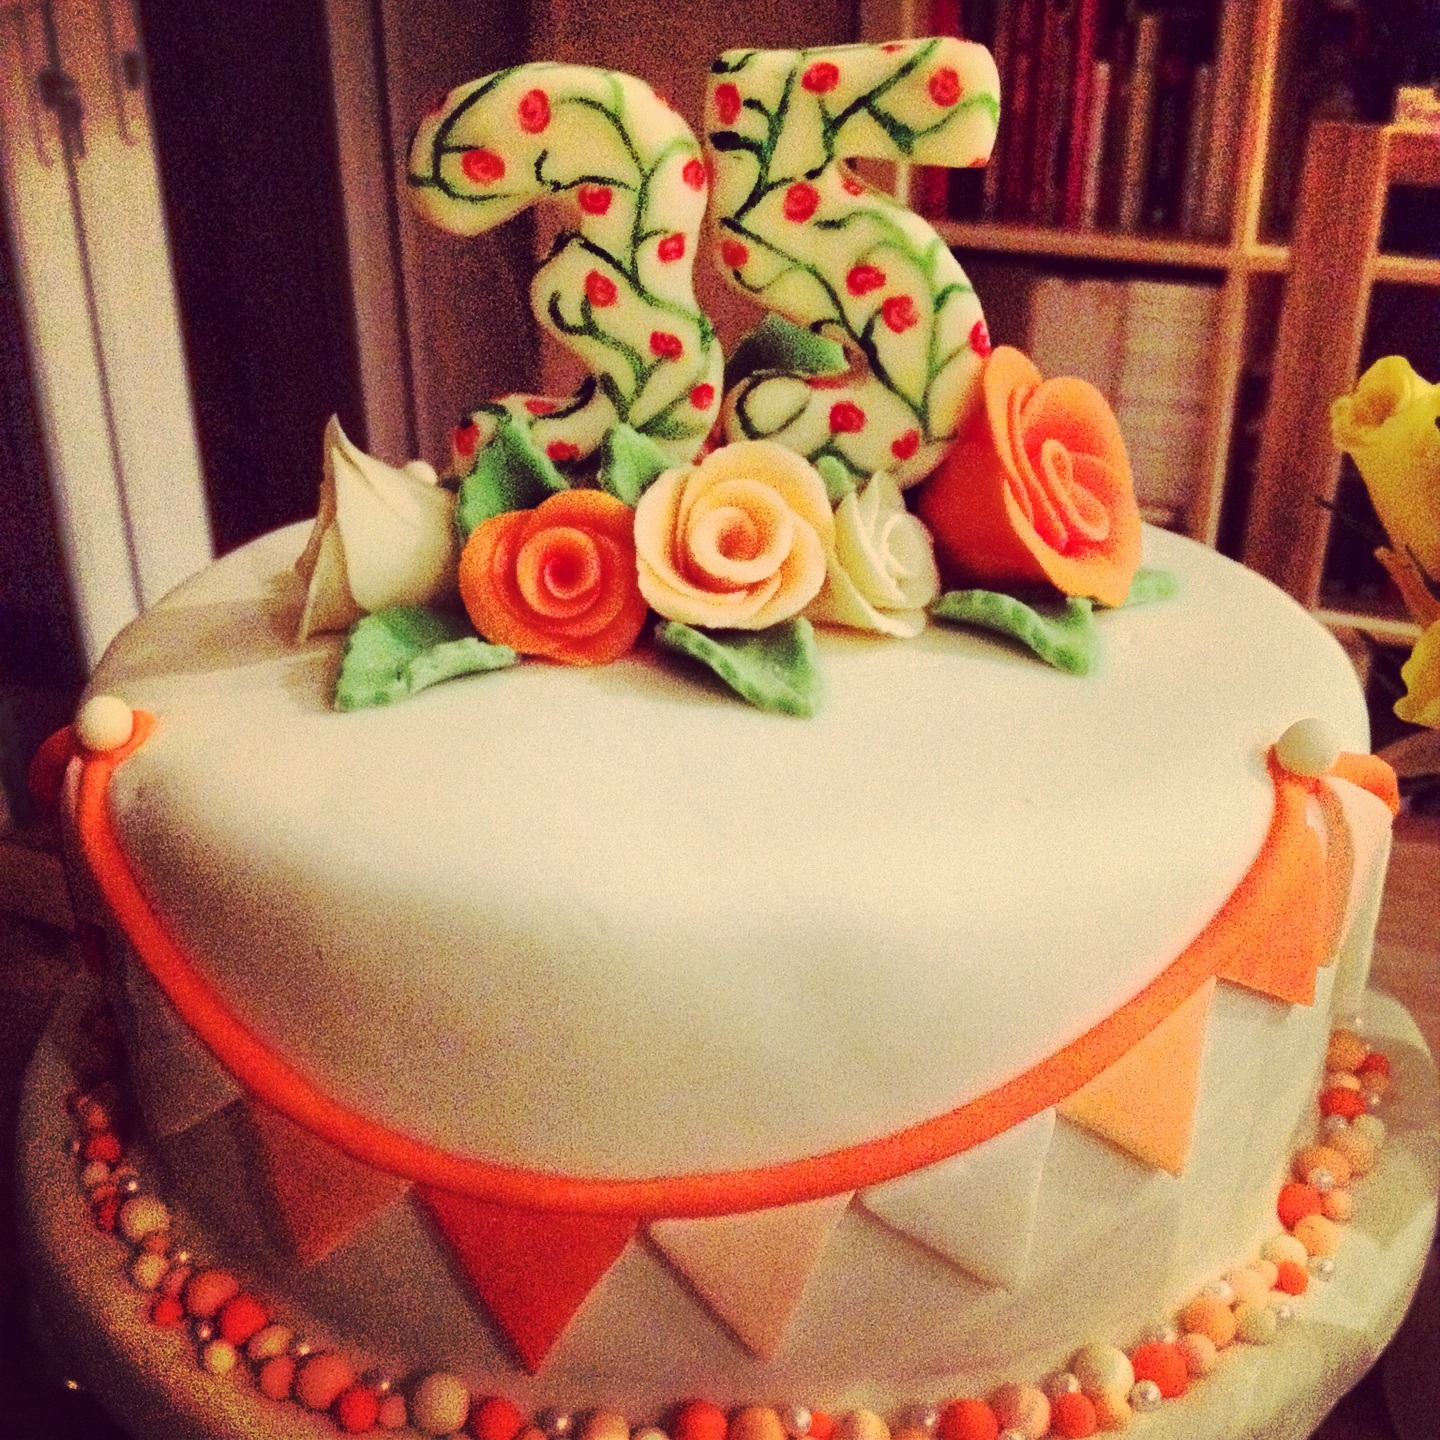 35th Anniversary cake! - Decorated Cake by Meenakshi S - CakesDecor